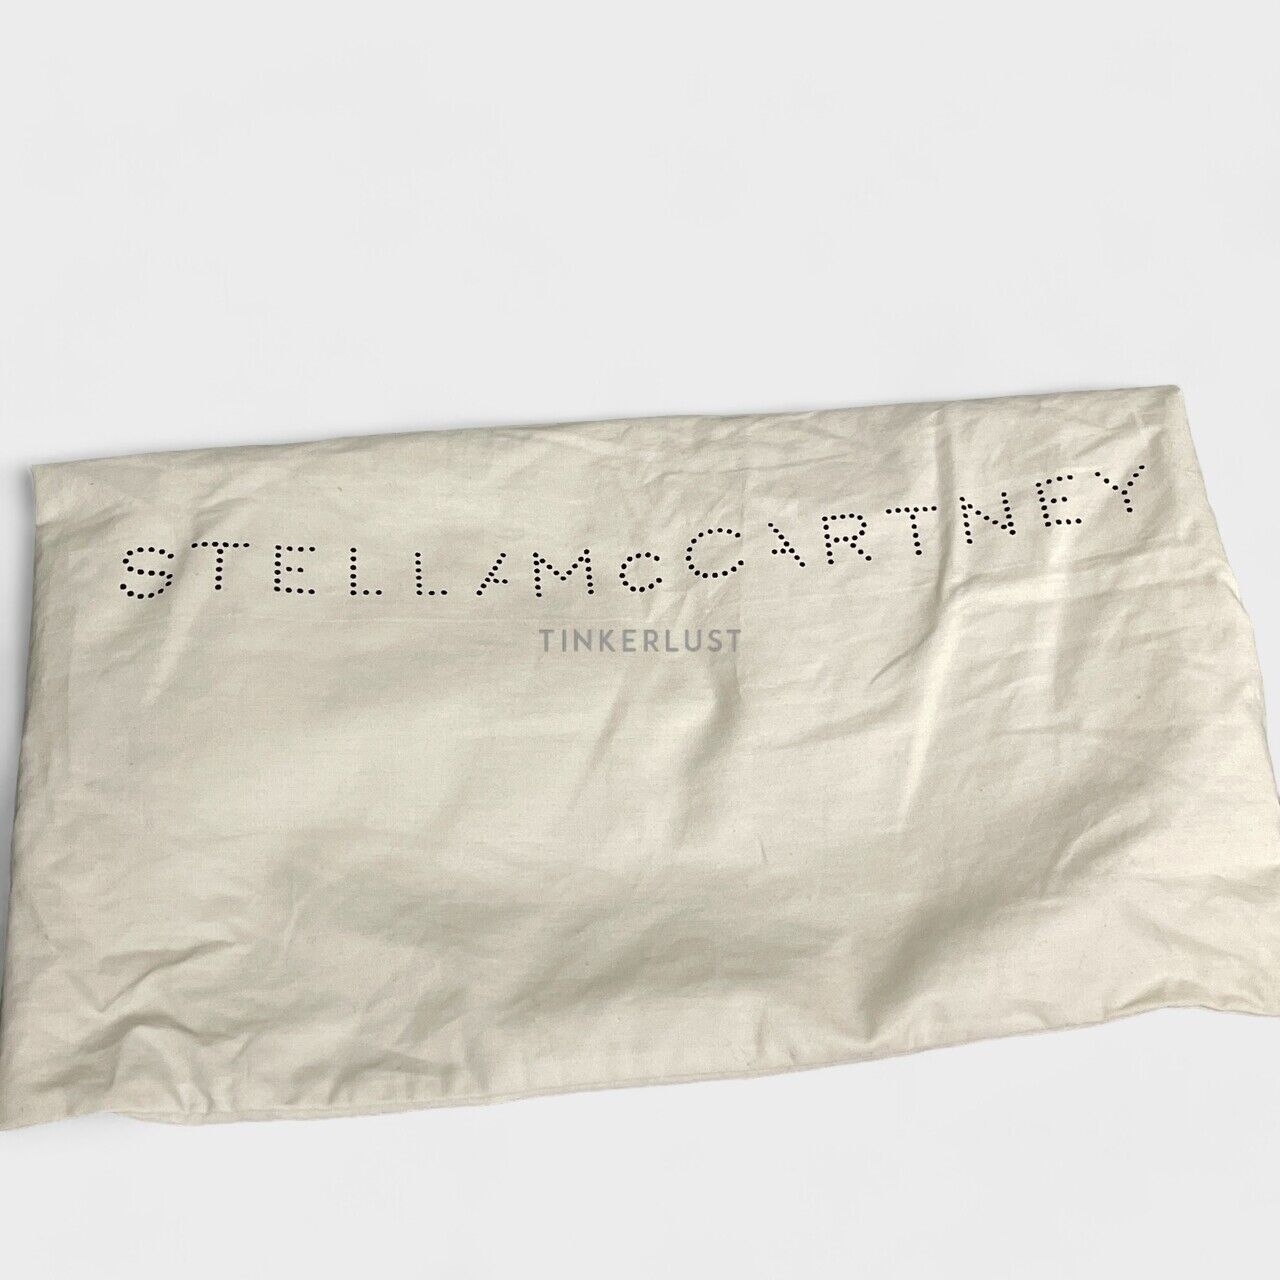 Stella McCartney Small Embossed Camera Brown Shoulder Bag